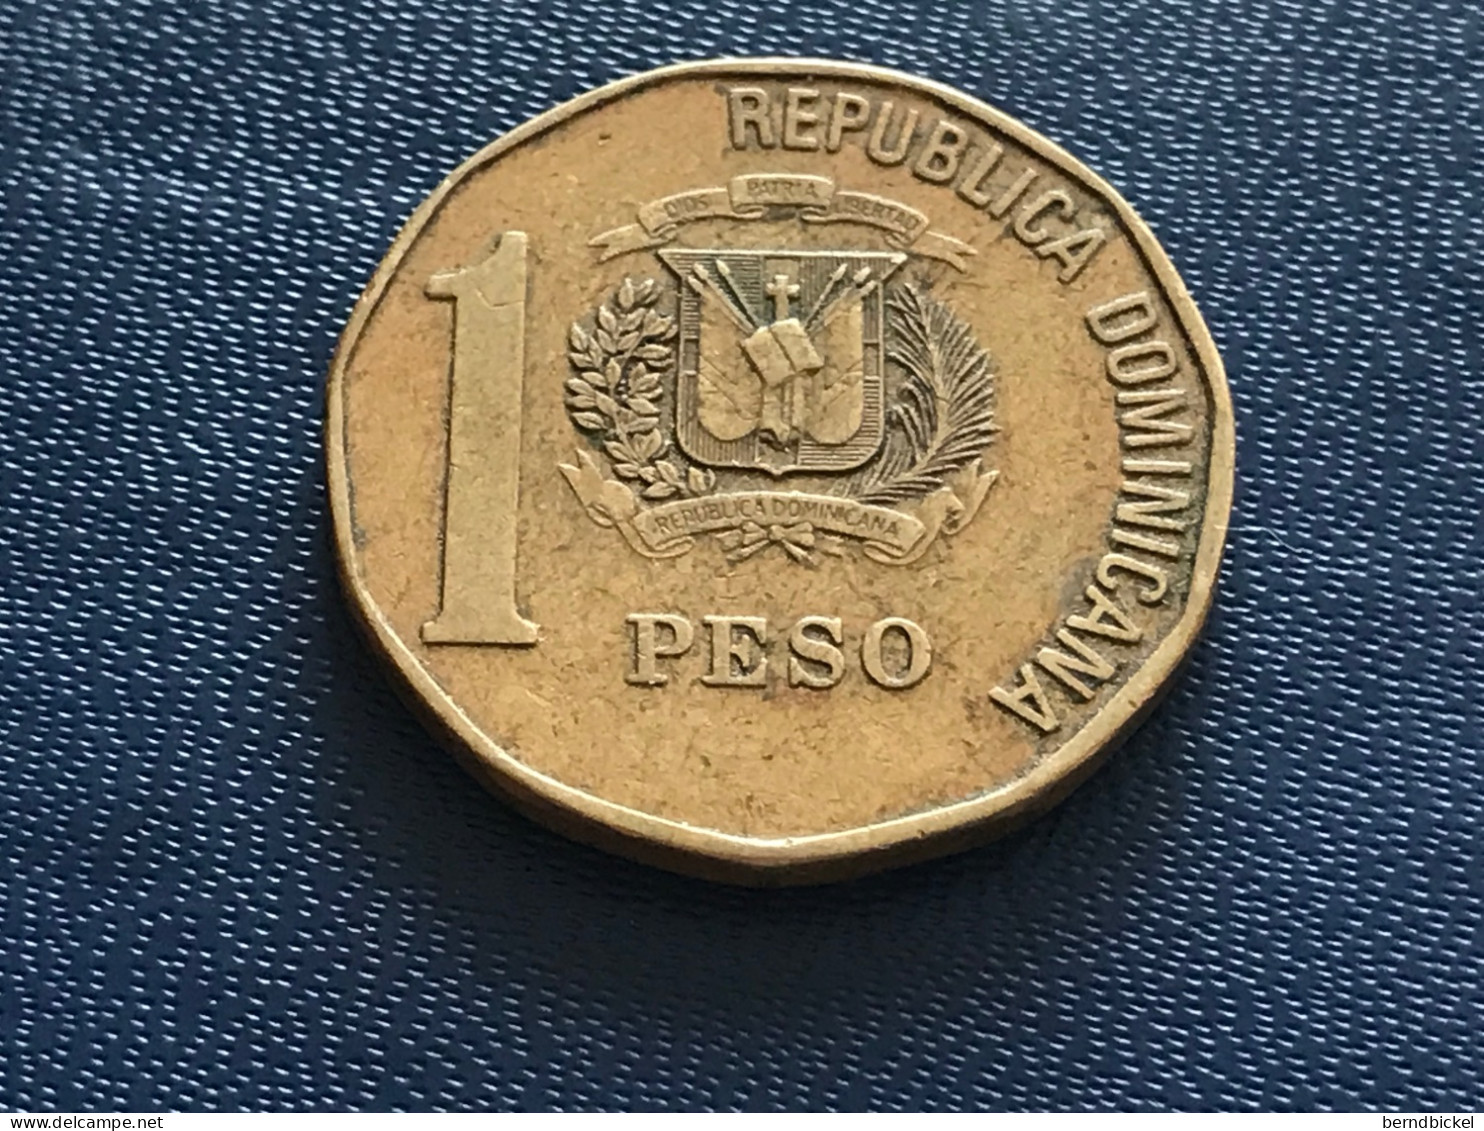 Münze Münzen Umlaufmünze Dominikanische Republik 1 Peso 2005 - Dominikanische Rep.